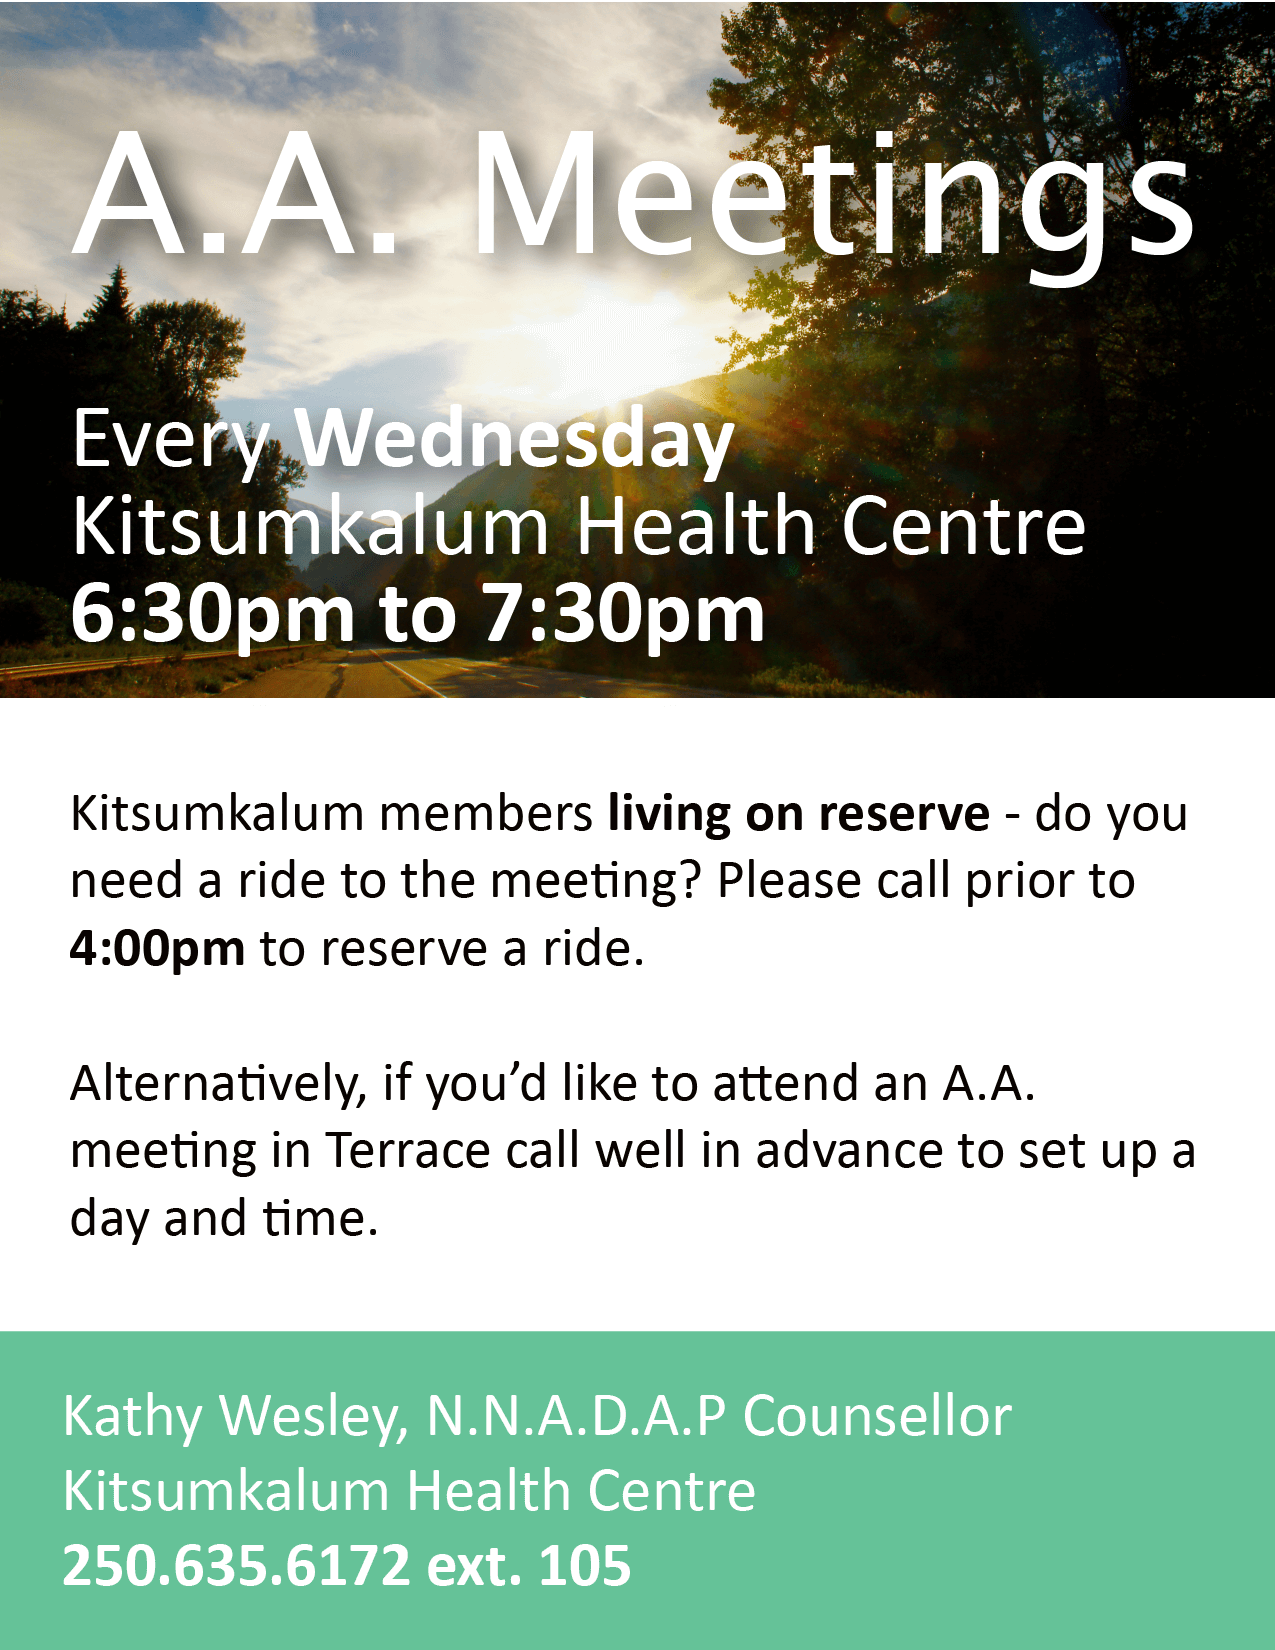 A.A. Meetings at the Kitsumkalum Health Centre